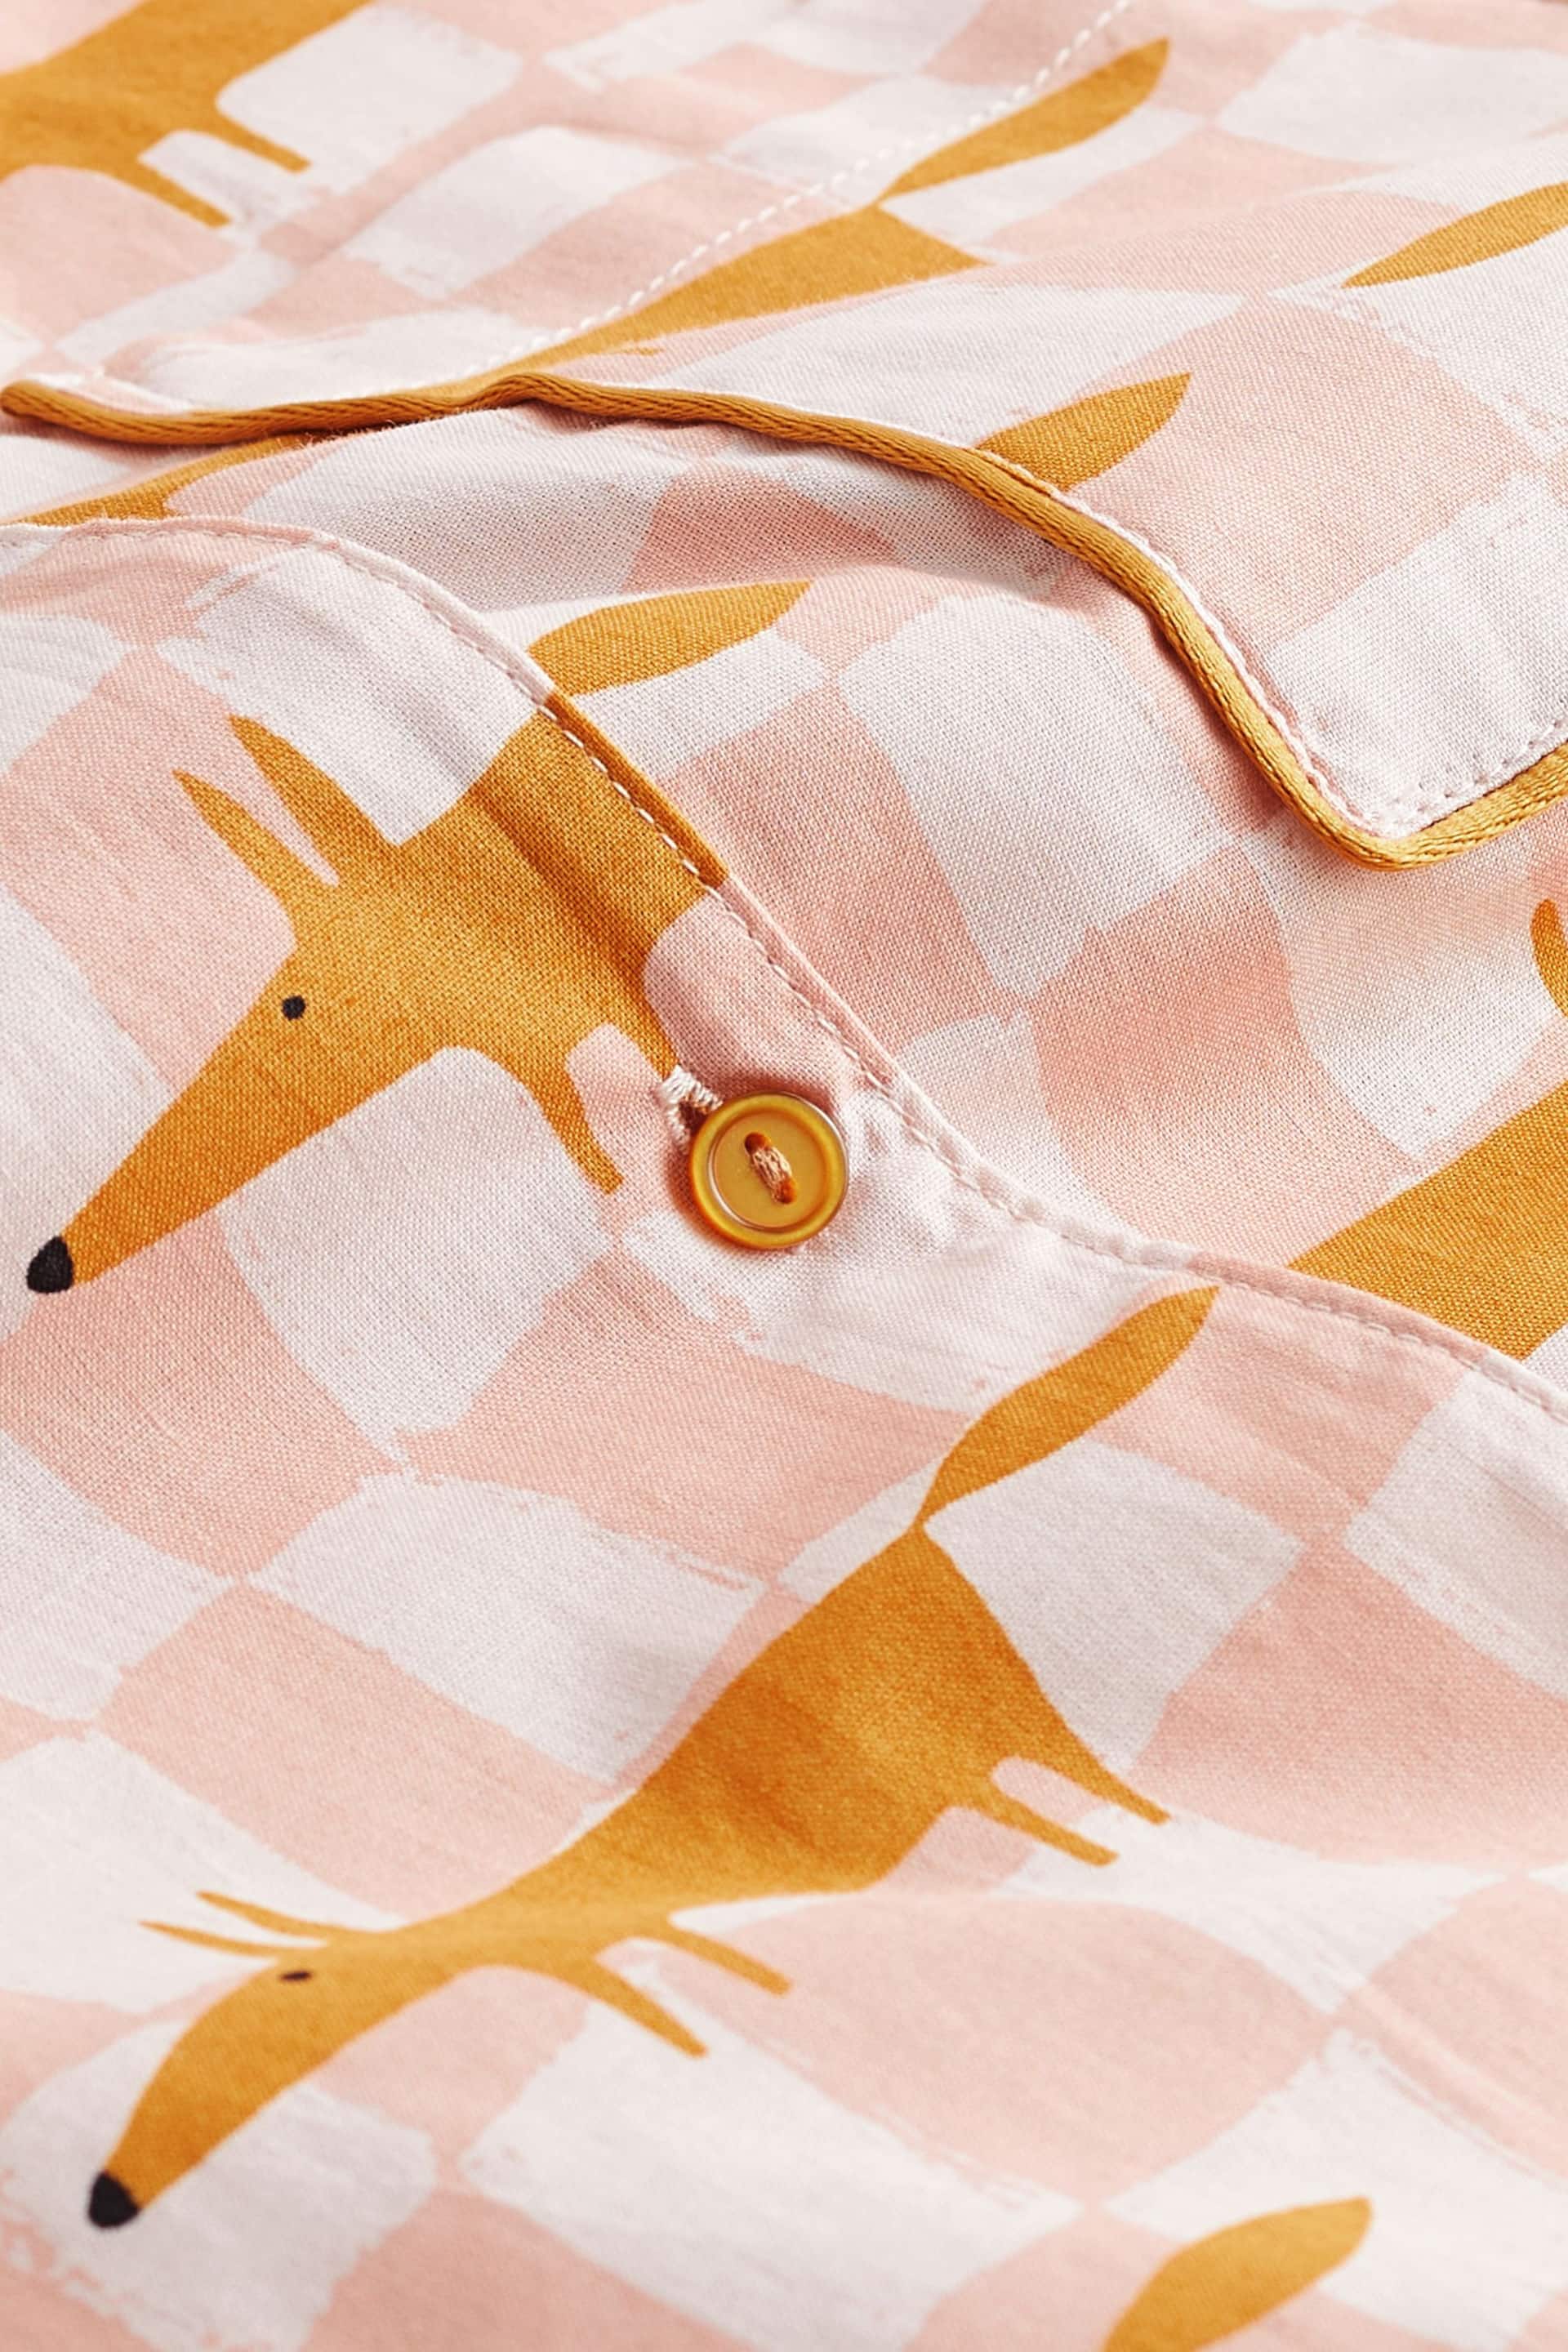 Pink/Cream Scion at Next Mr Fox Short Set Cotton Pyjamas - Image 10 of 10